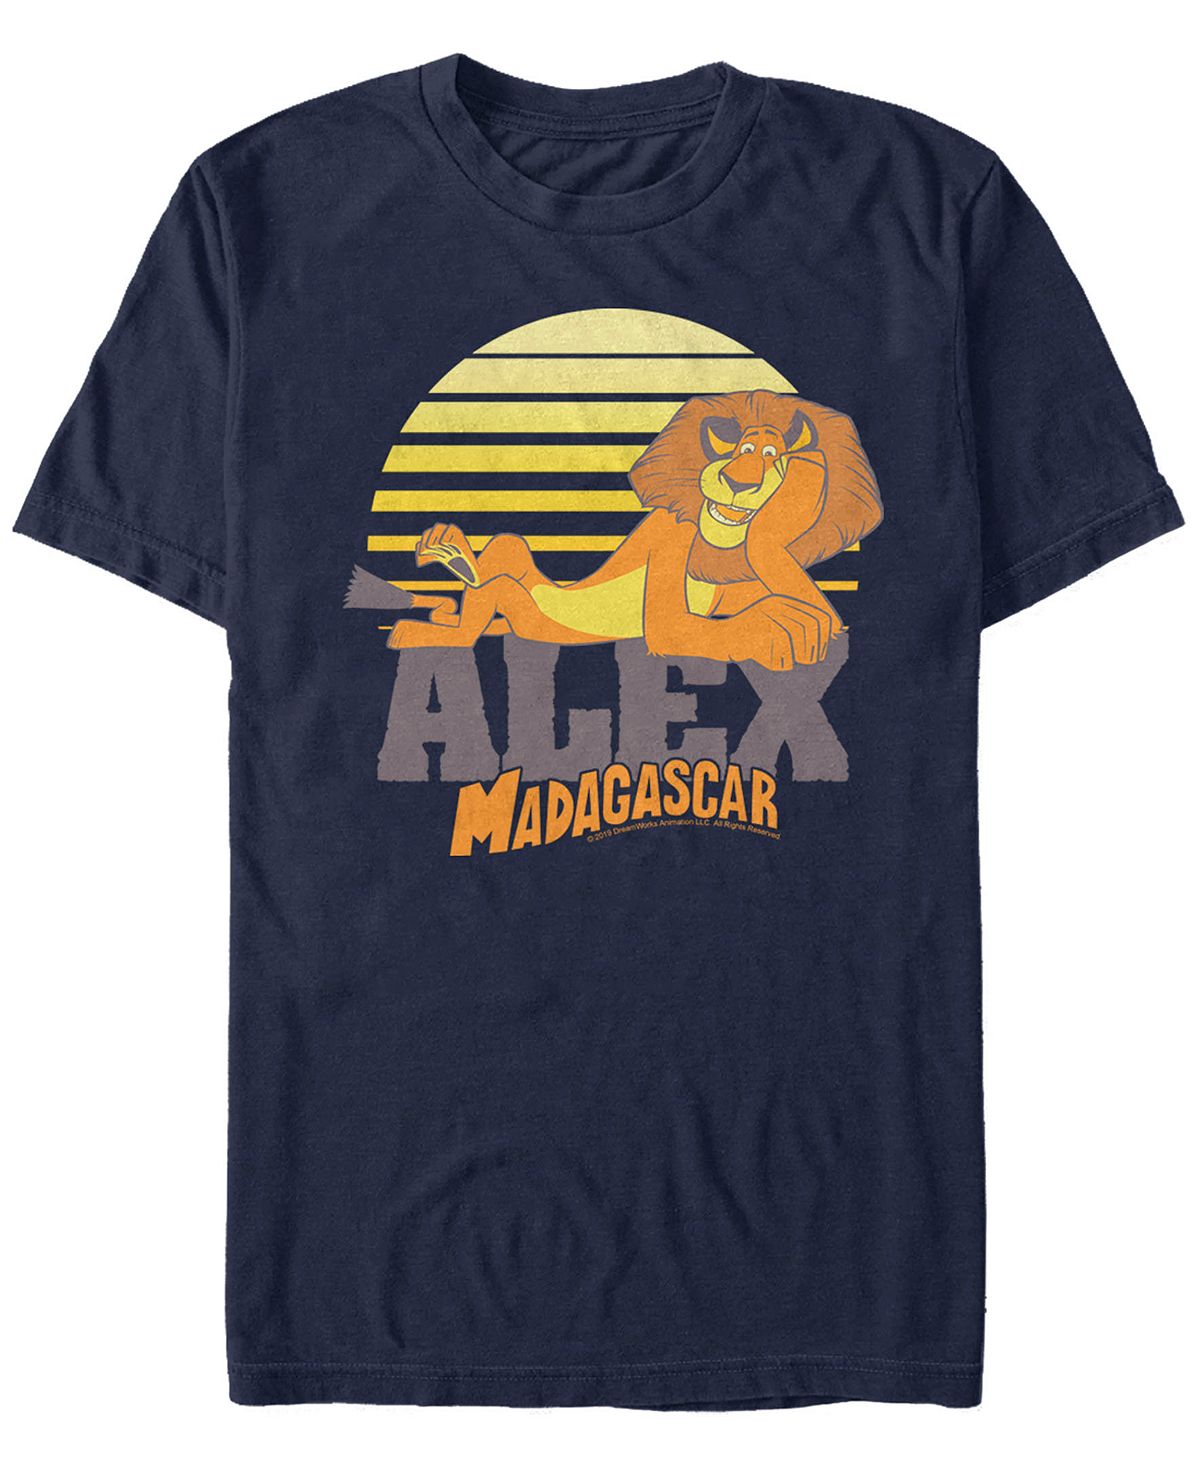 Мужская футболка alex с коротким рукавом madagascar Fifth Sun, синий